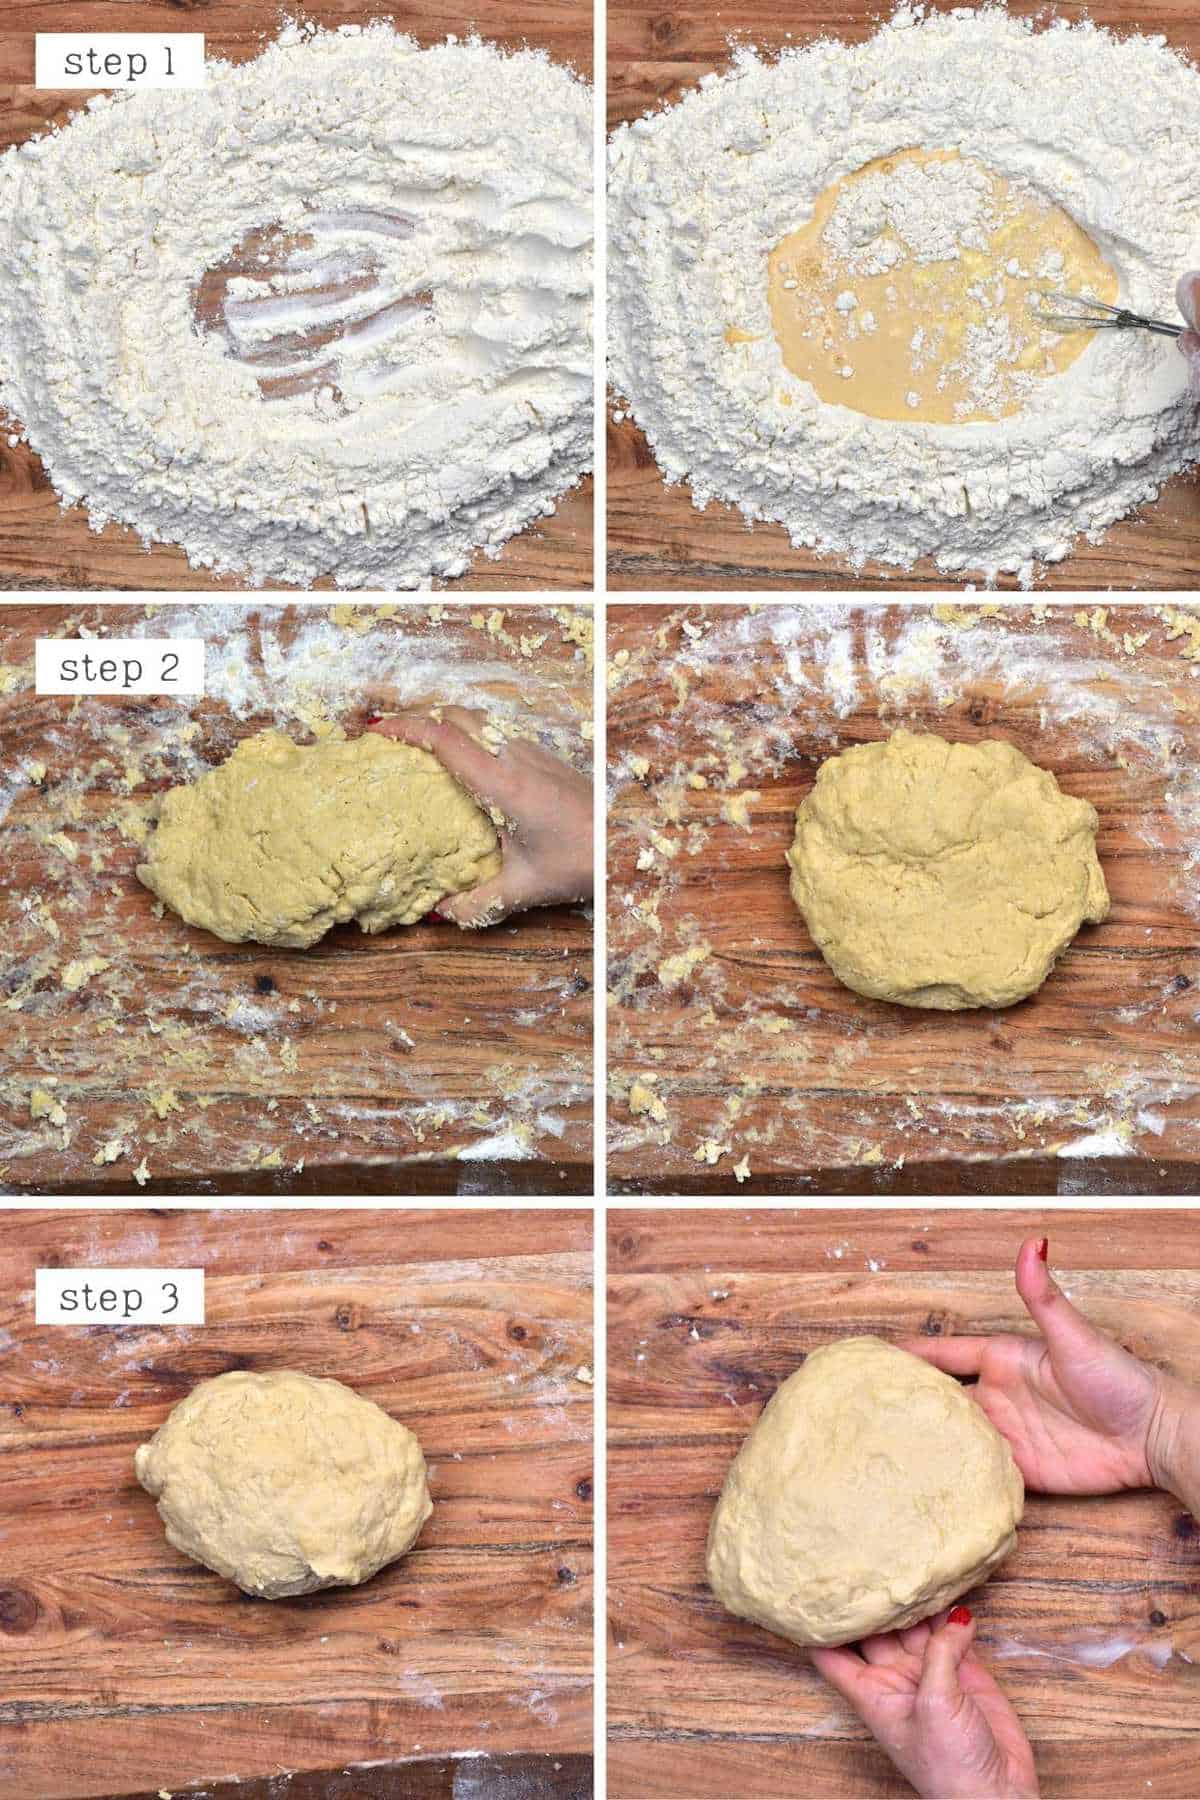 Steps for making buns dough